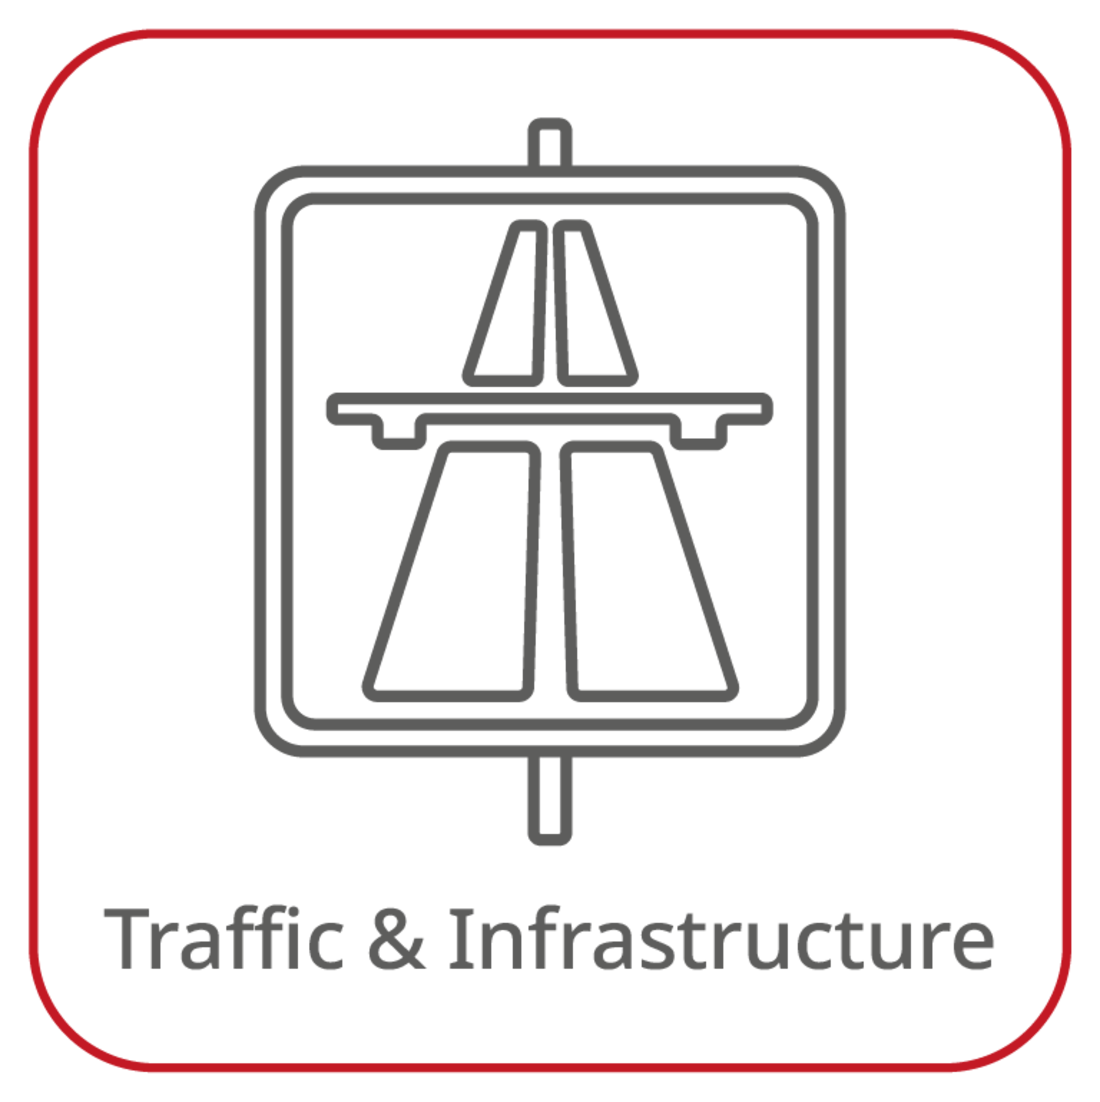 Traffic & Infrastructure